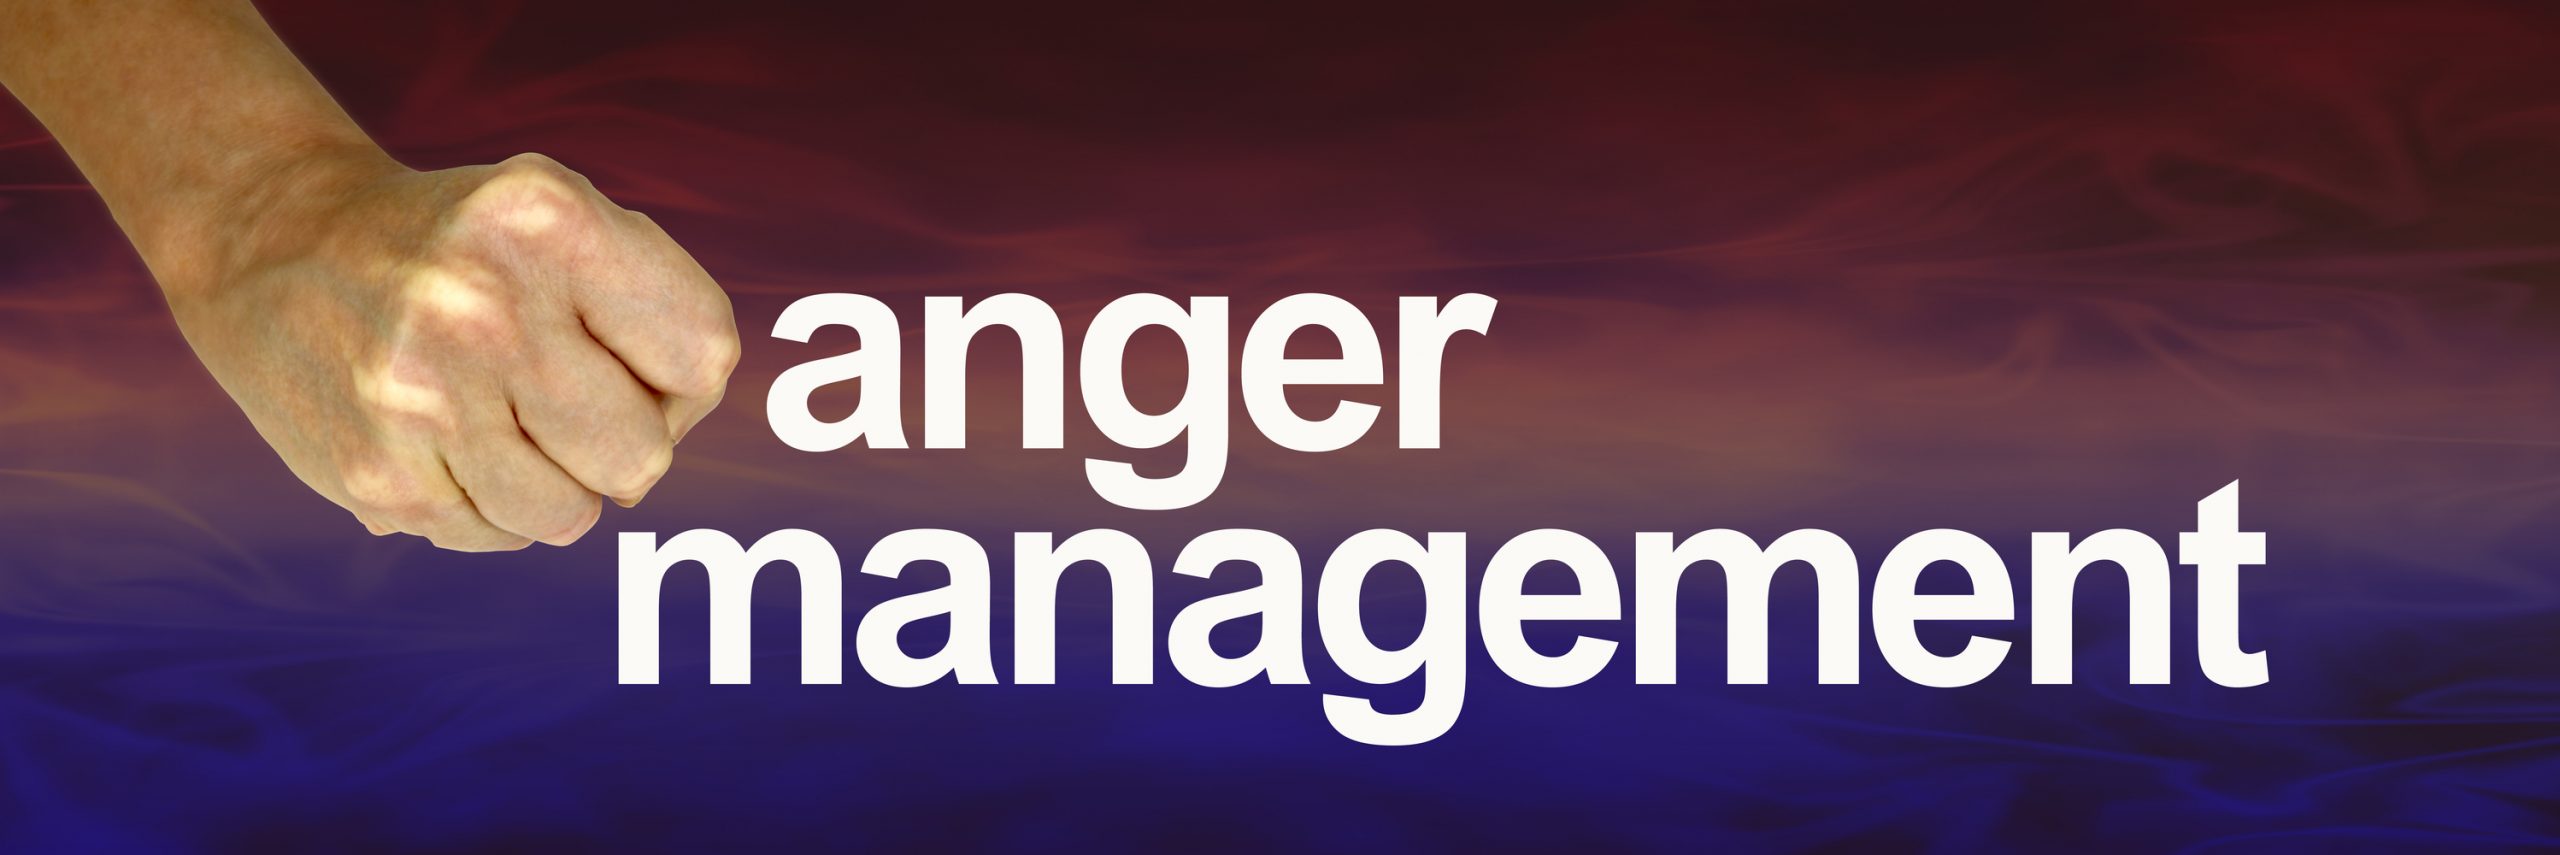 Anger management training